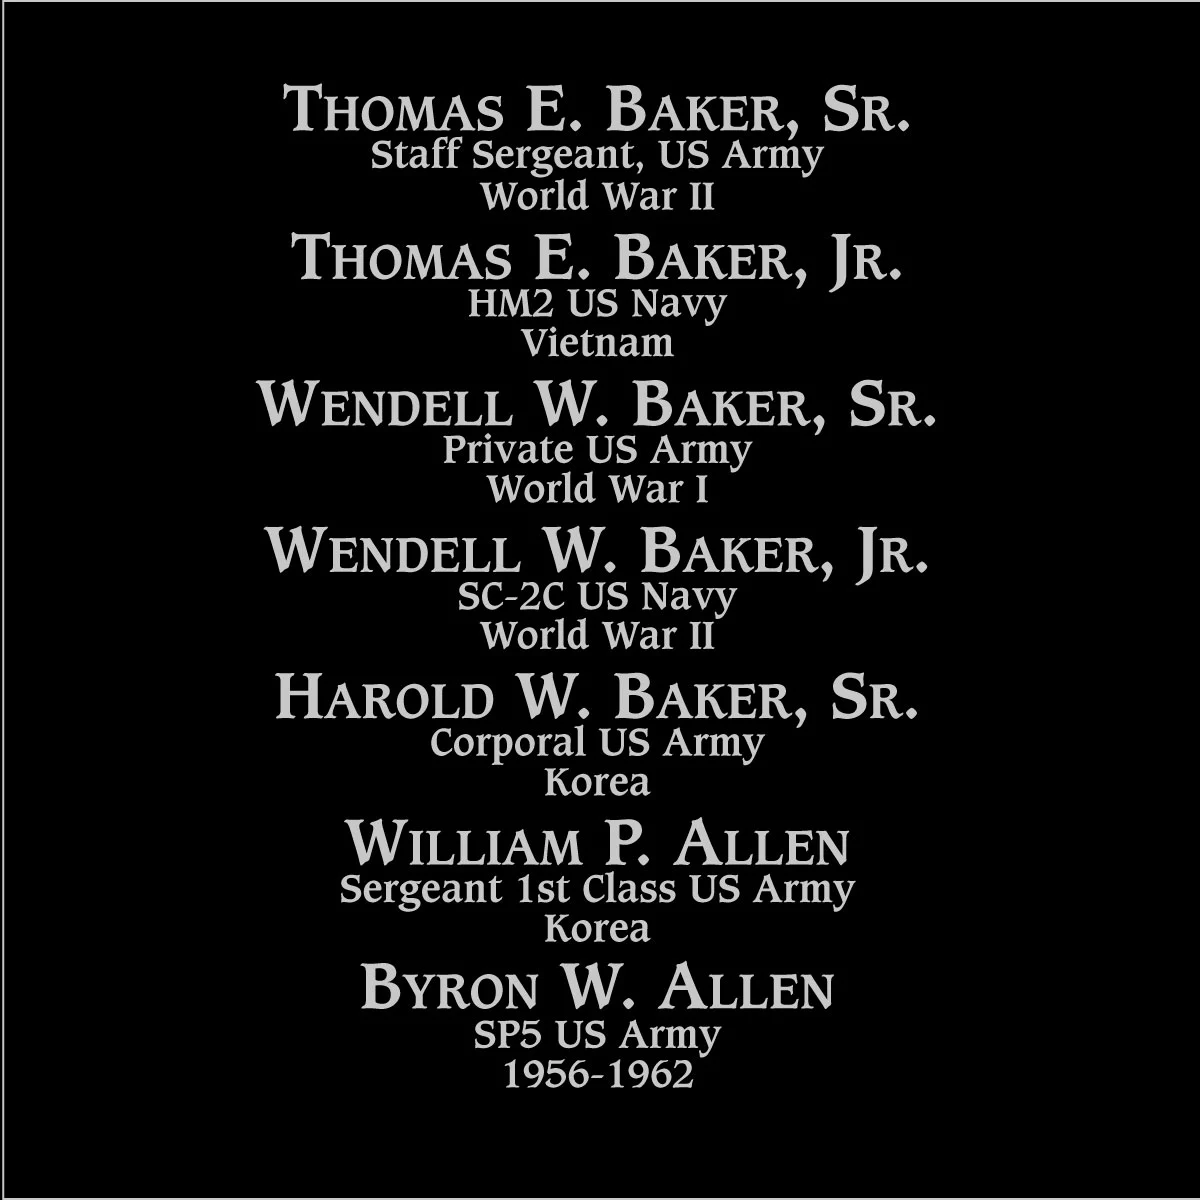 Thomas E. Baker, jr